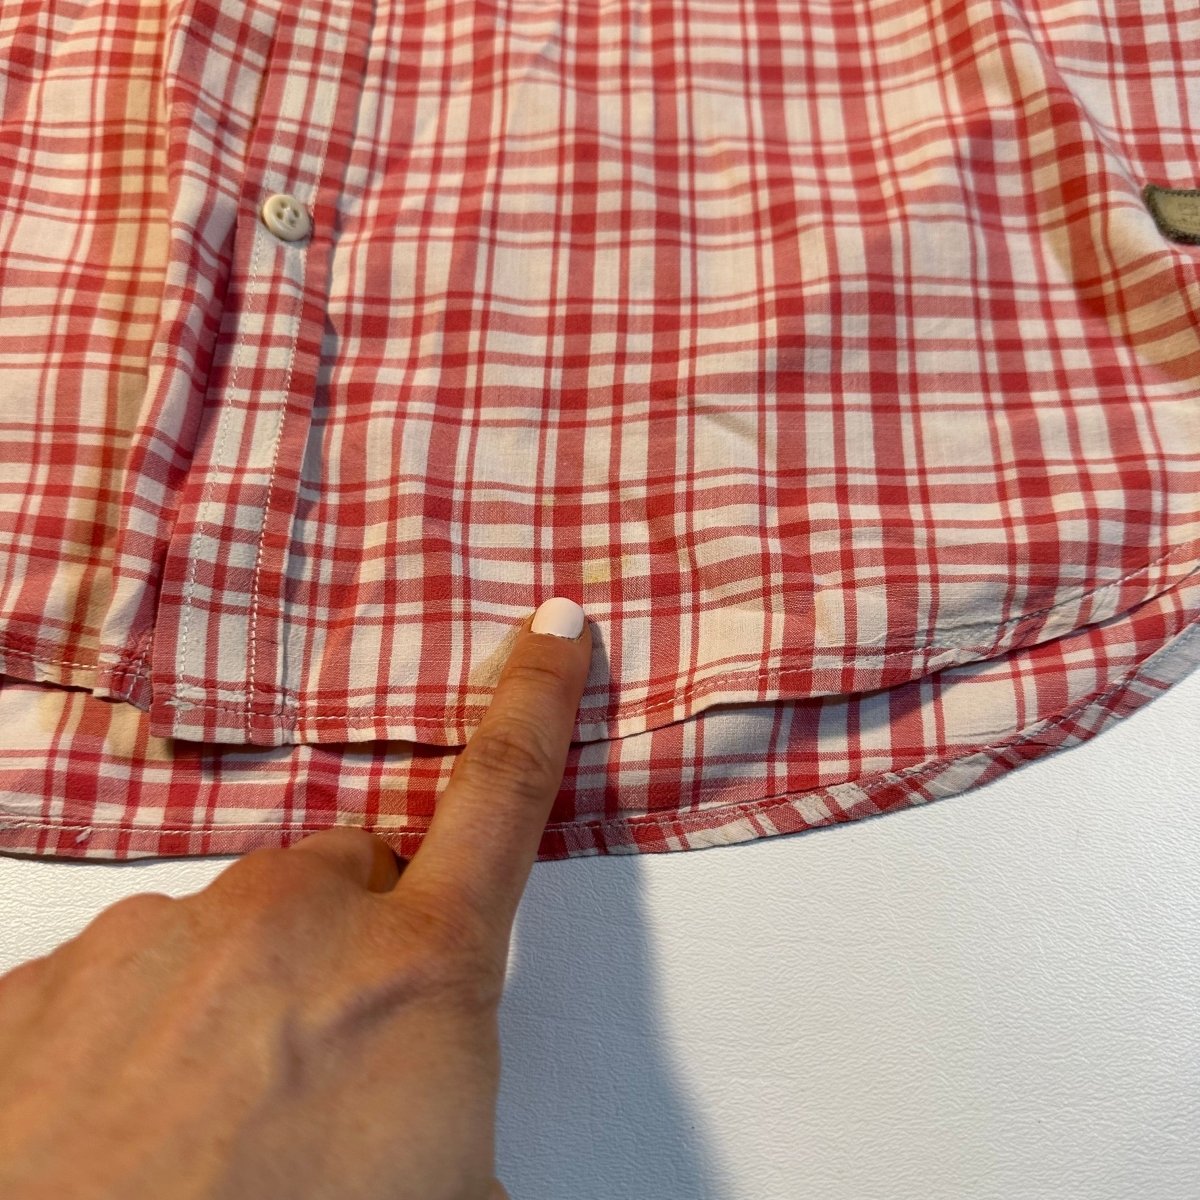 Scotch & Soda - Scotch And Soda Size L Red Plaid Button Up “Light Weights” Long Sleeve Shirt - Shirts - Afterglow Market